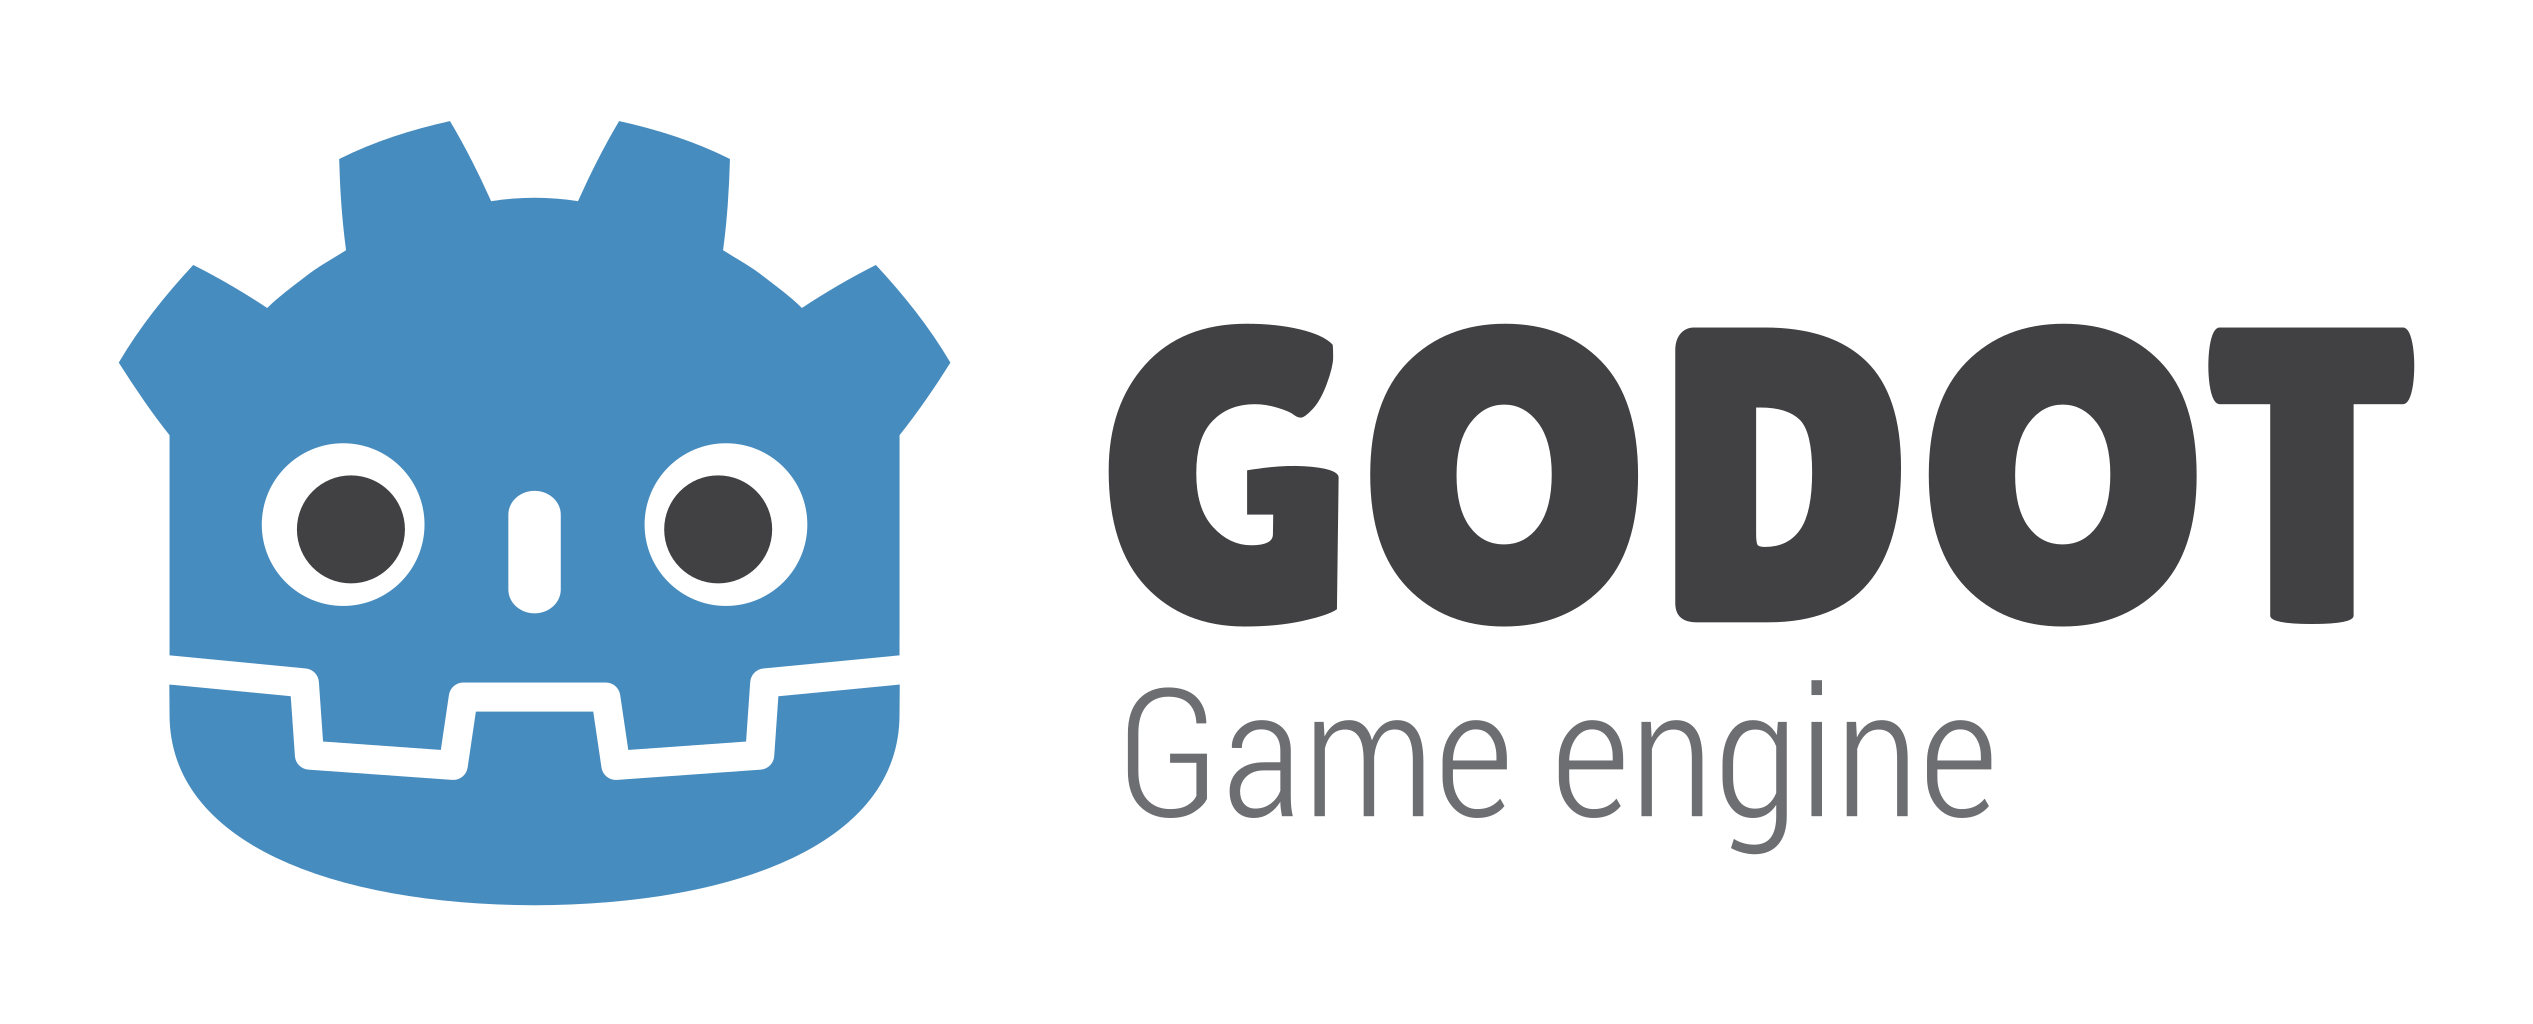 Godot Game engine